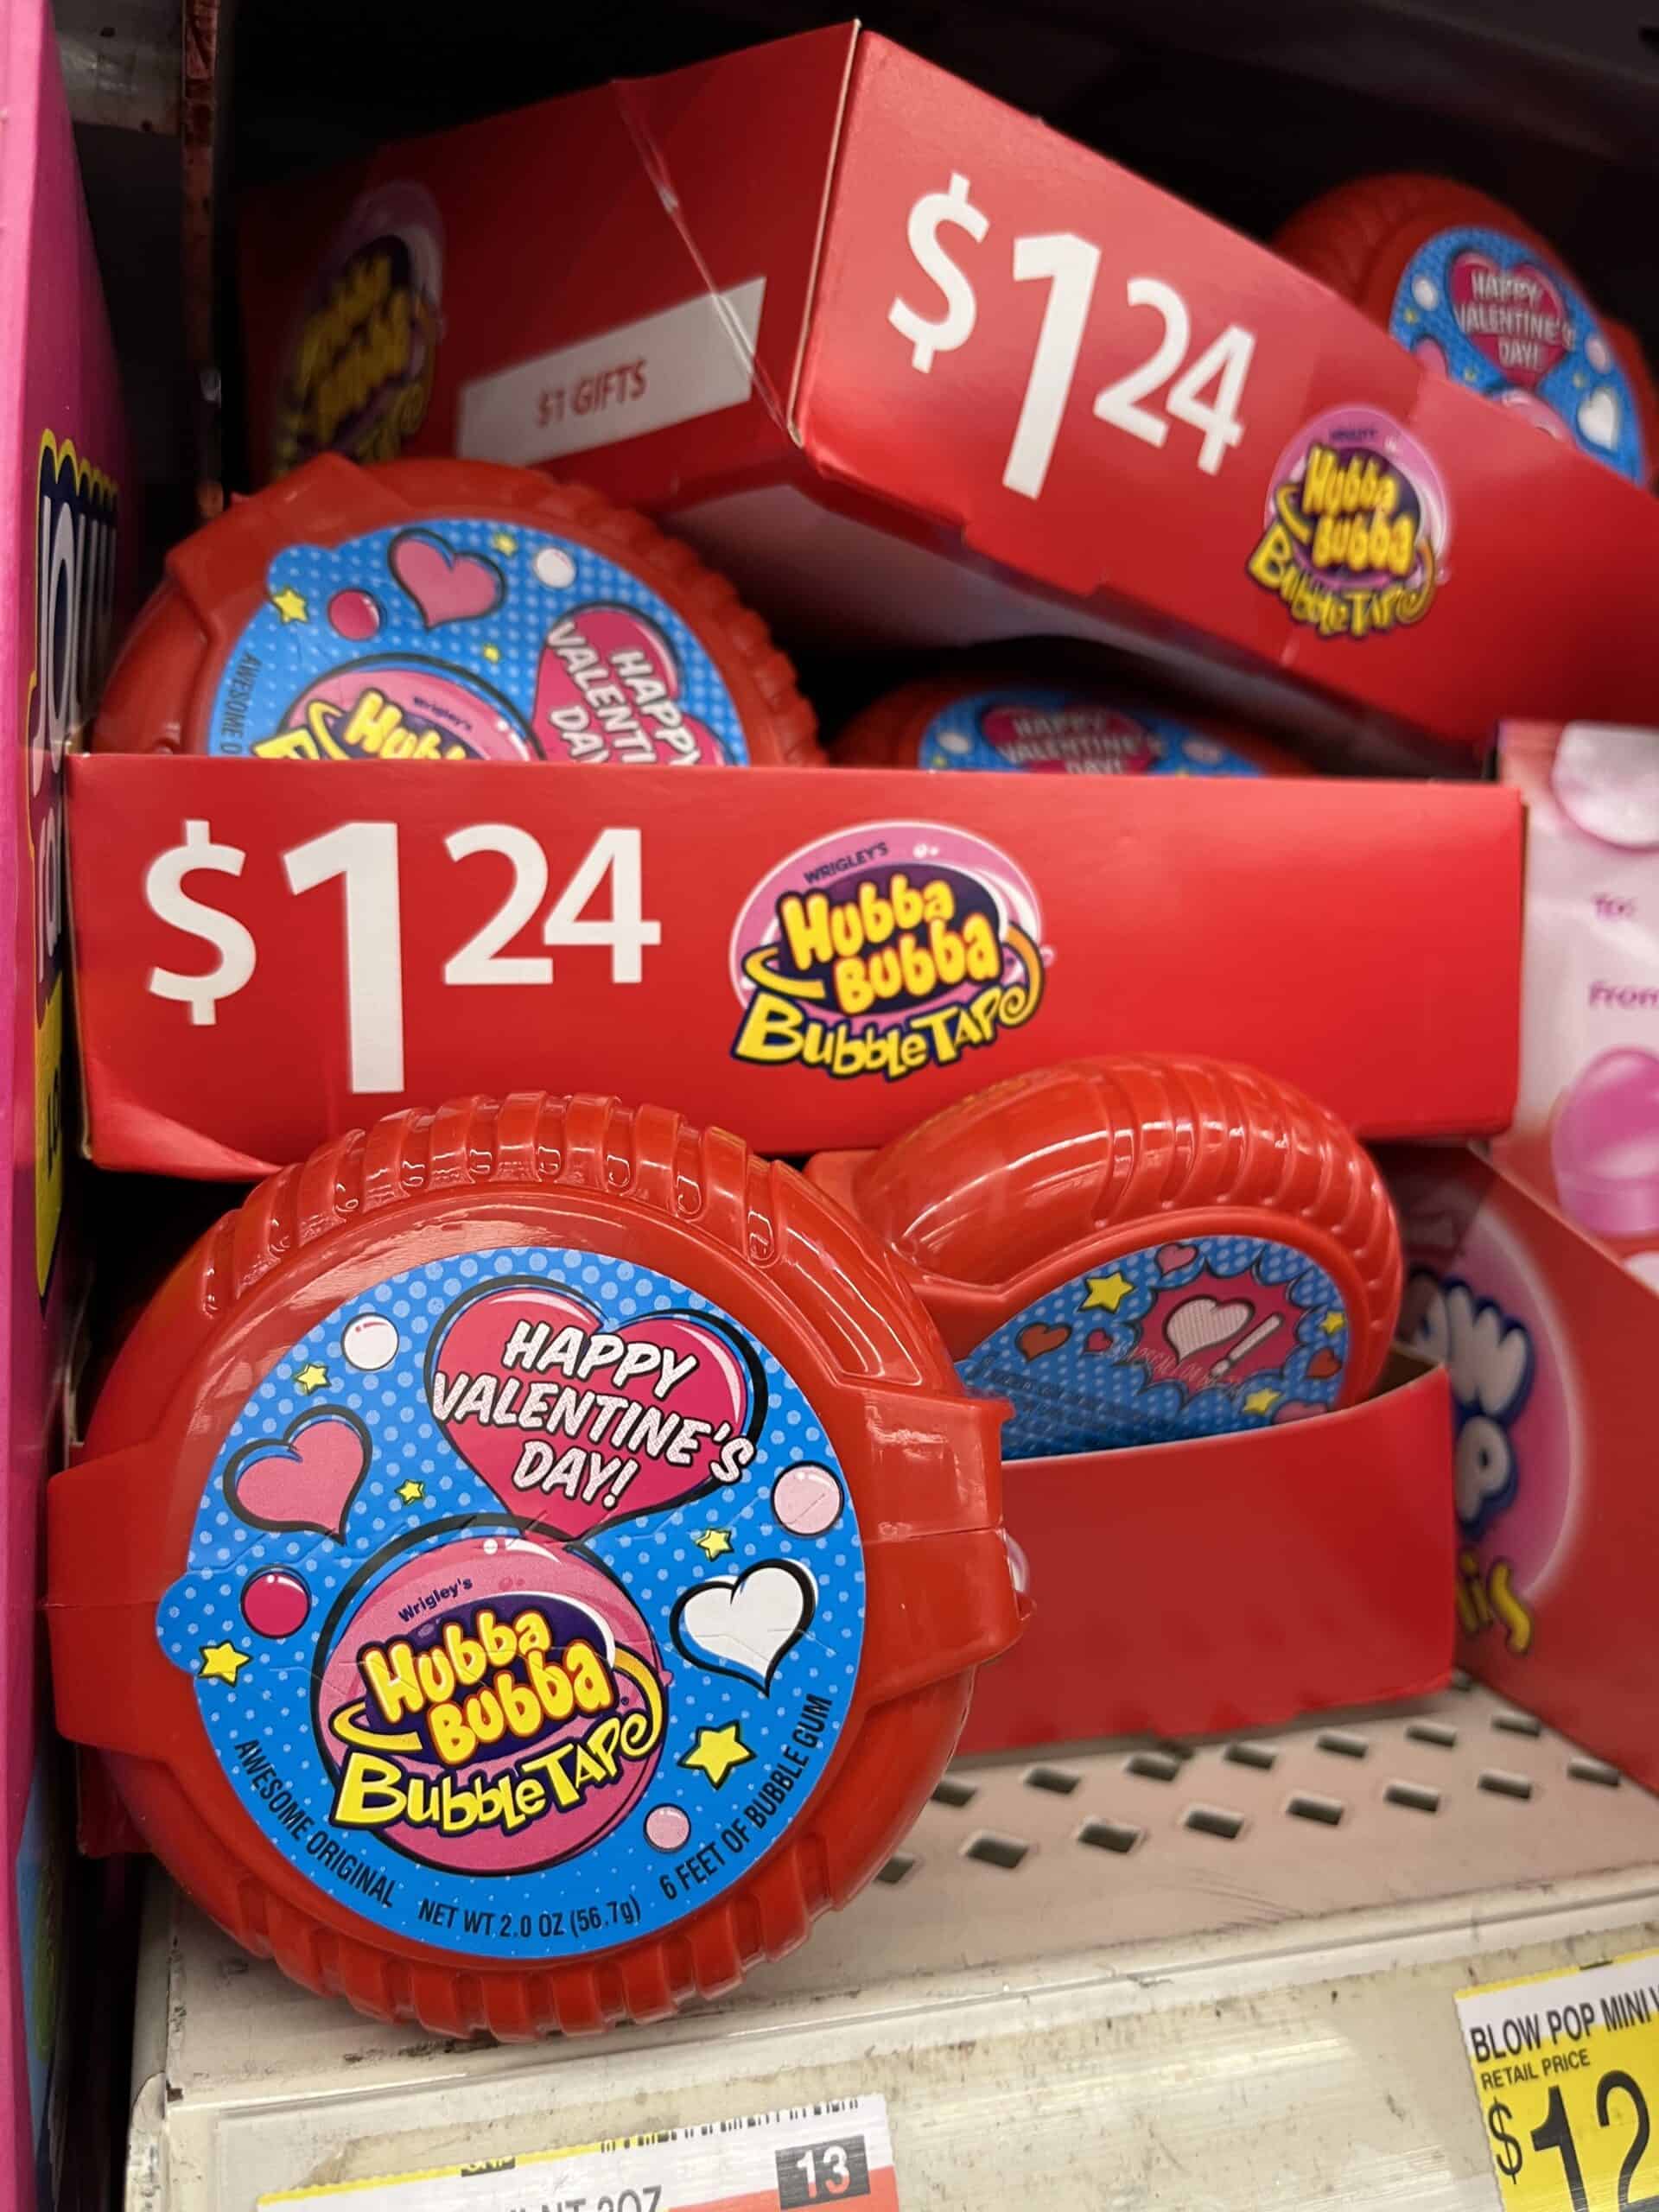 Bubble Tape gum for Valentine's Day